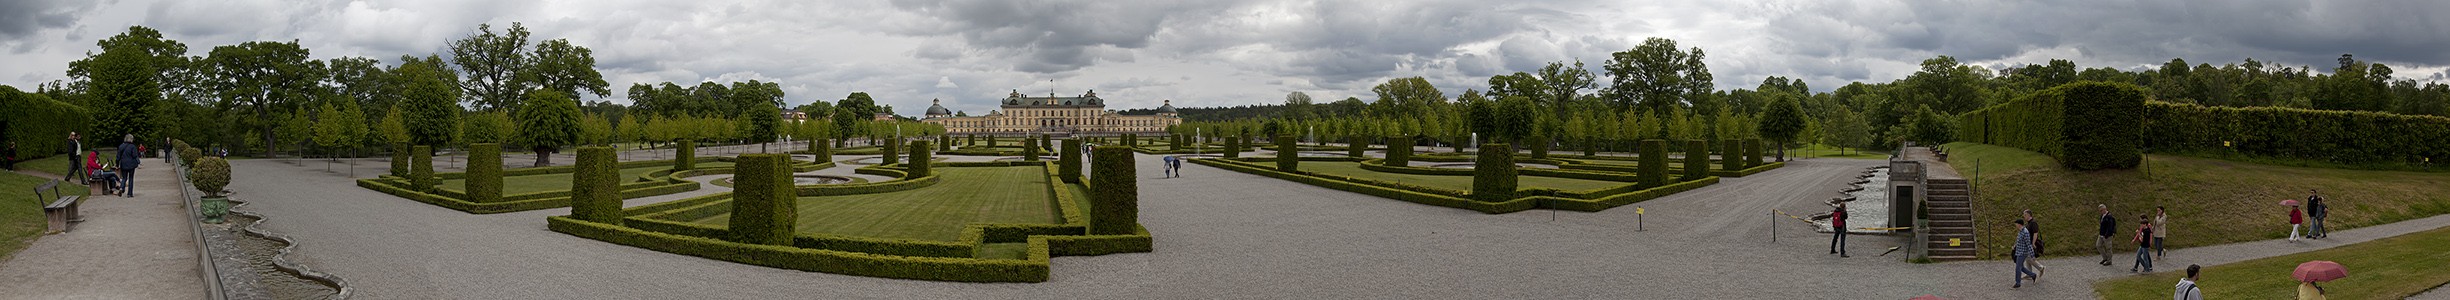 Stockholm Schloss und Park Drottningholm Schloss Drottningholm